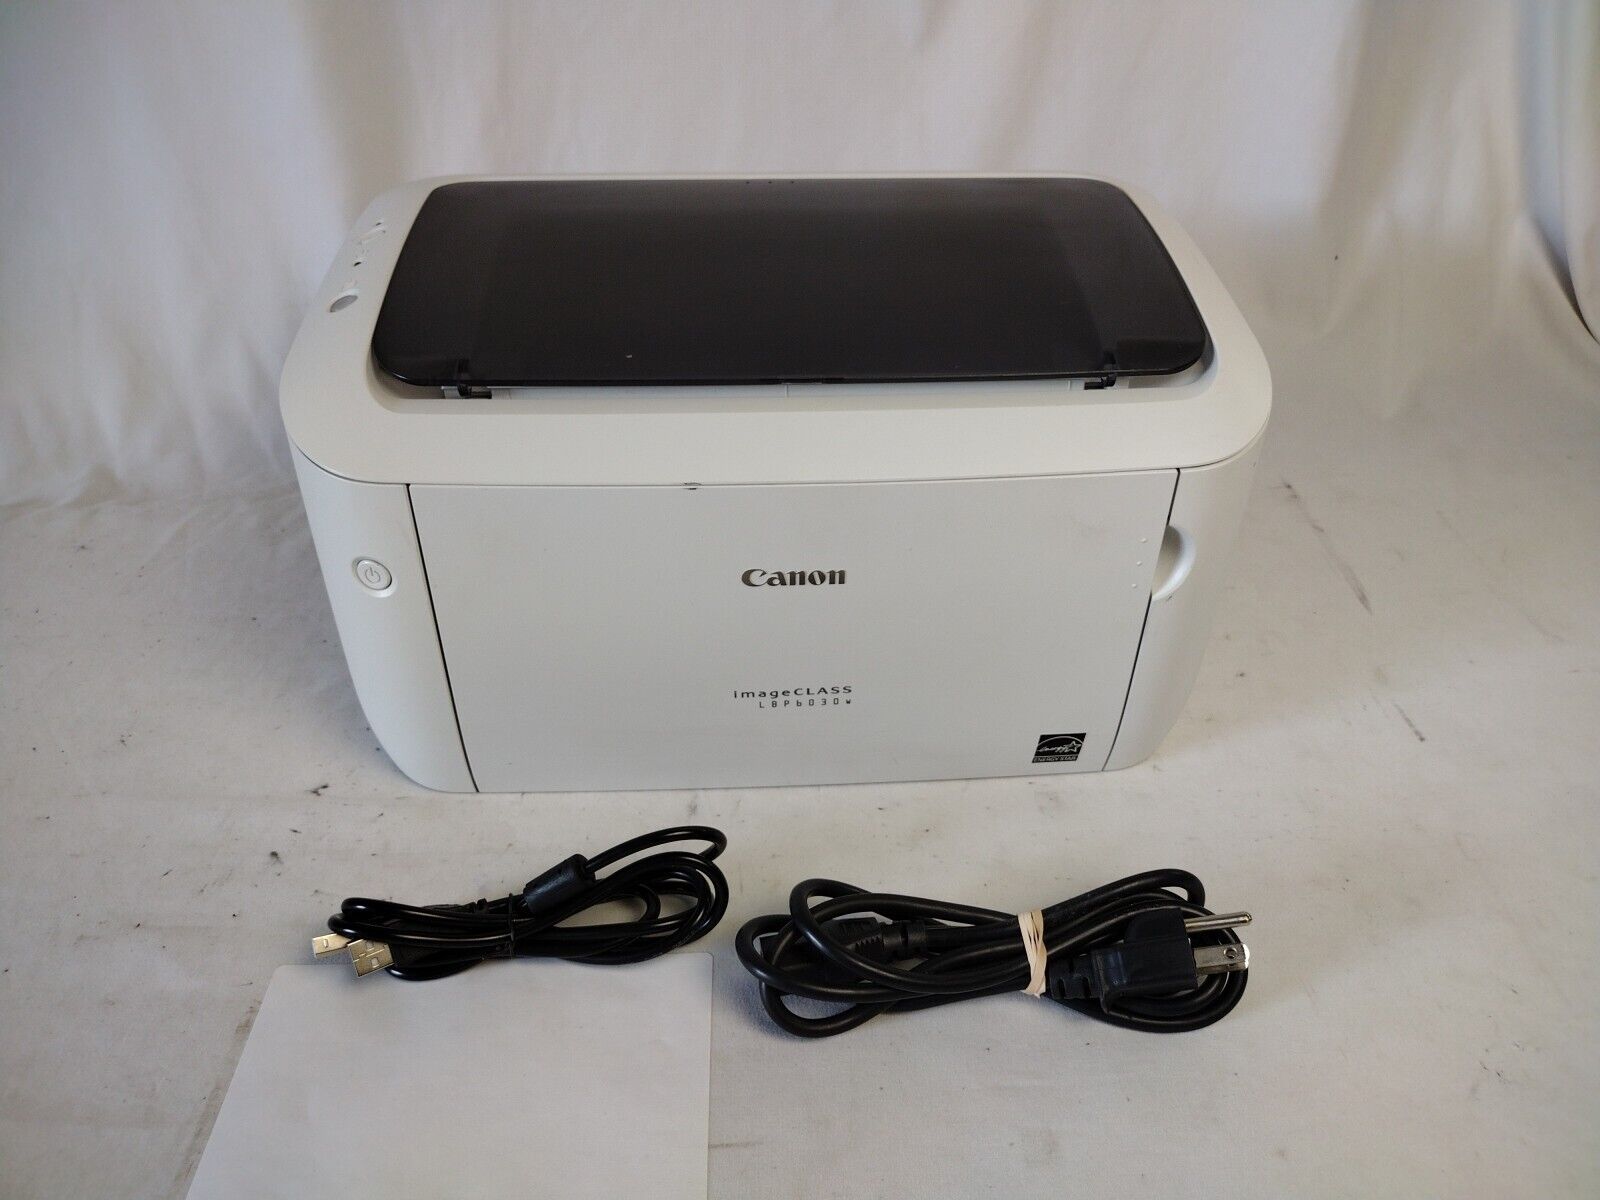 Canon imageCLASS LBP6030W Monochrome Wireless Laser Printer Mint Condition